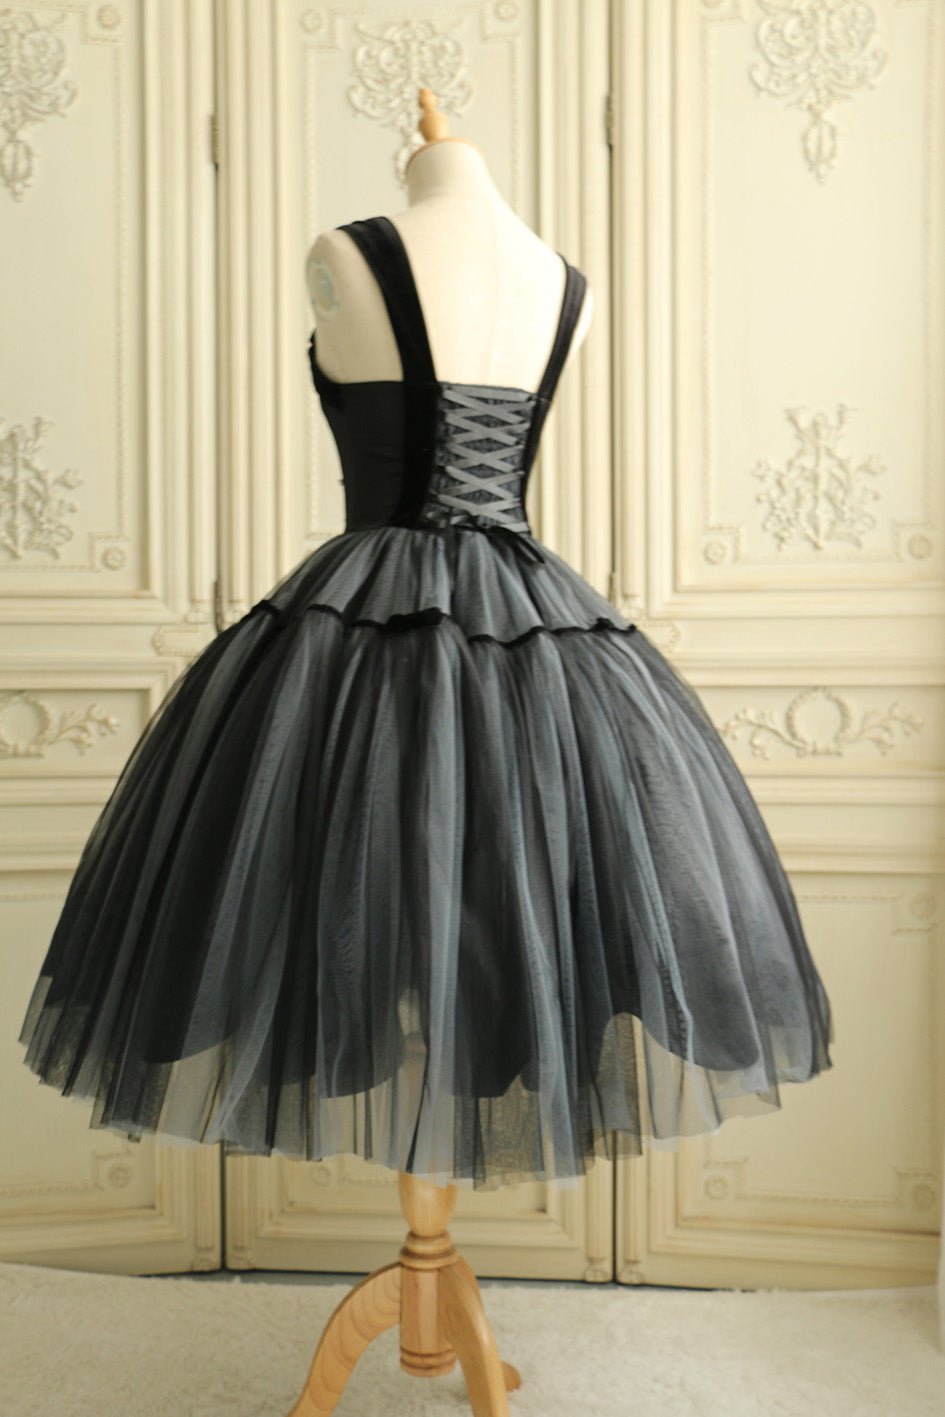 Black Gothic Lolita Dress With Corset - Black Ball Gown Wedding